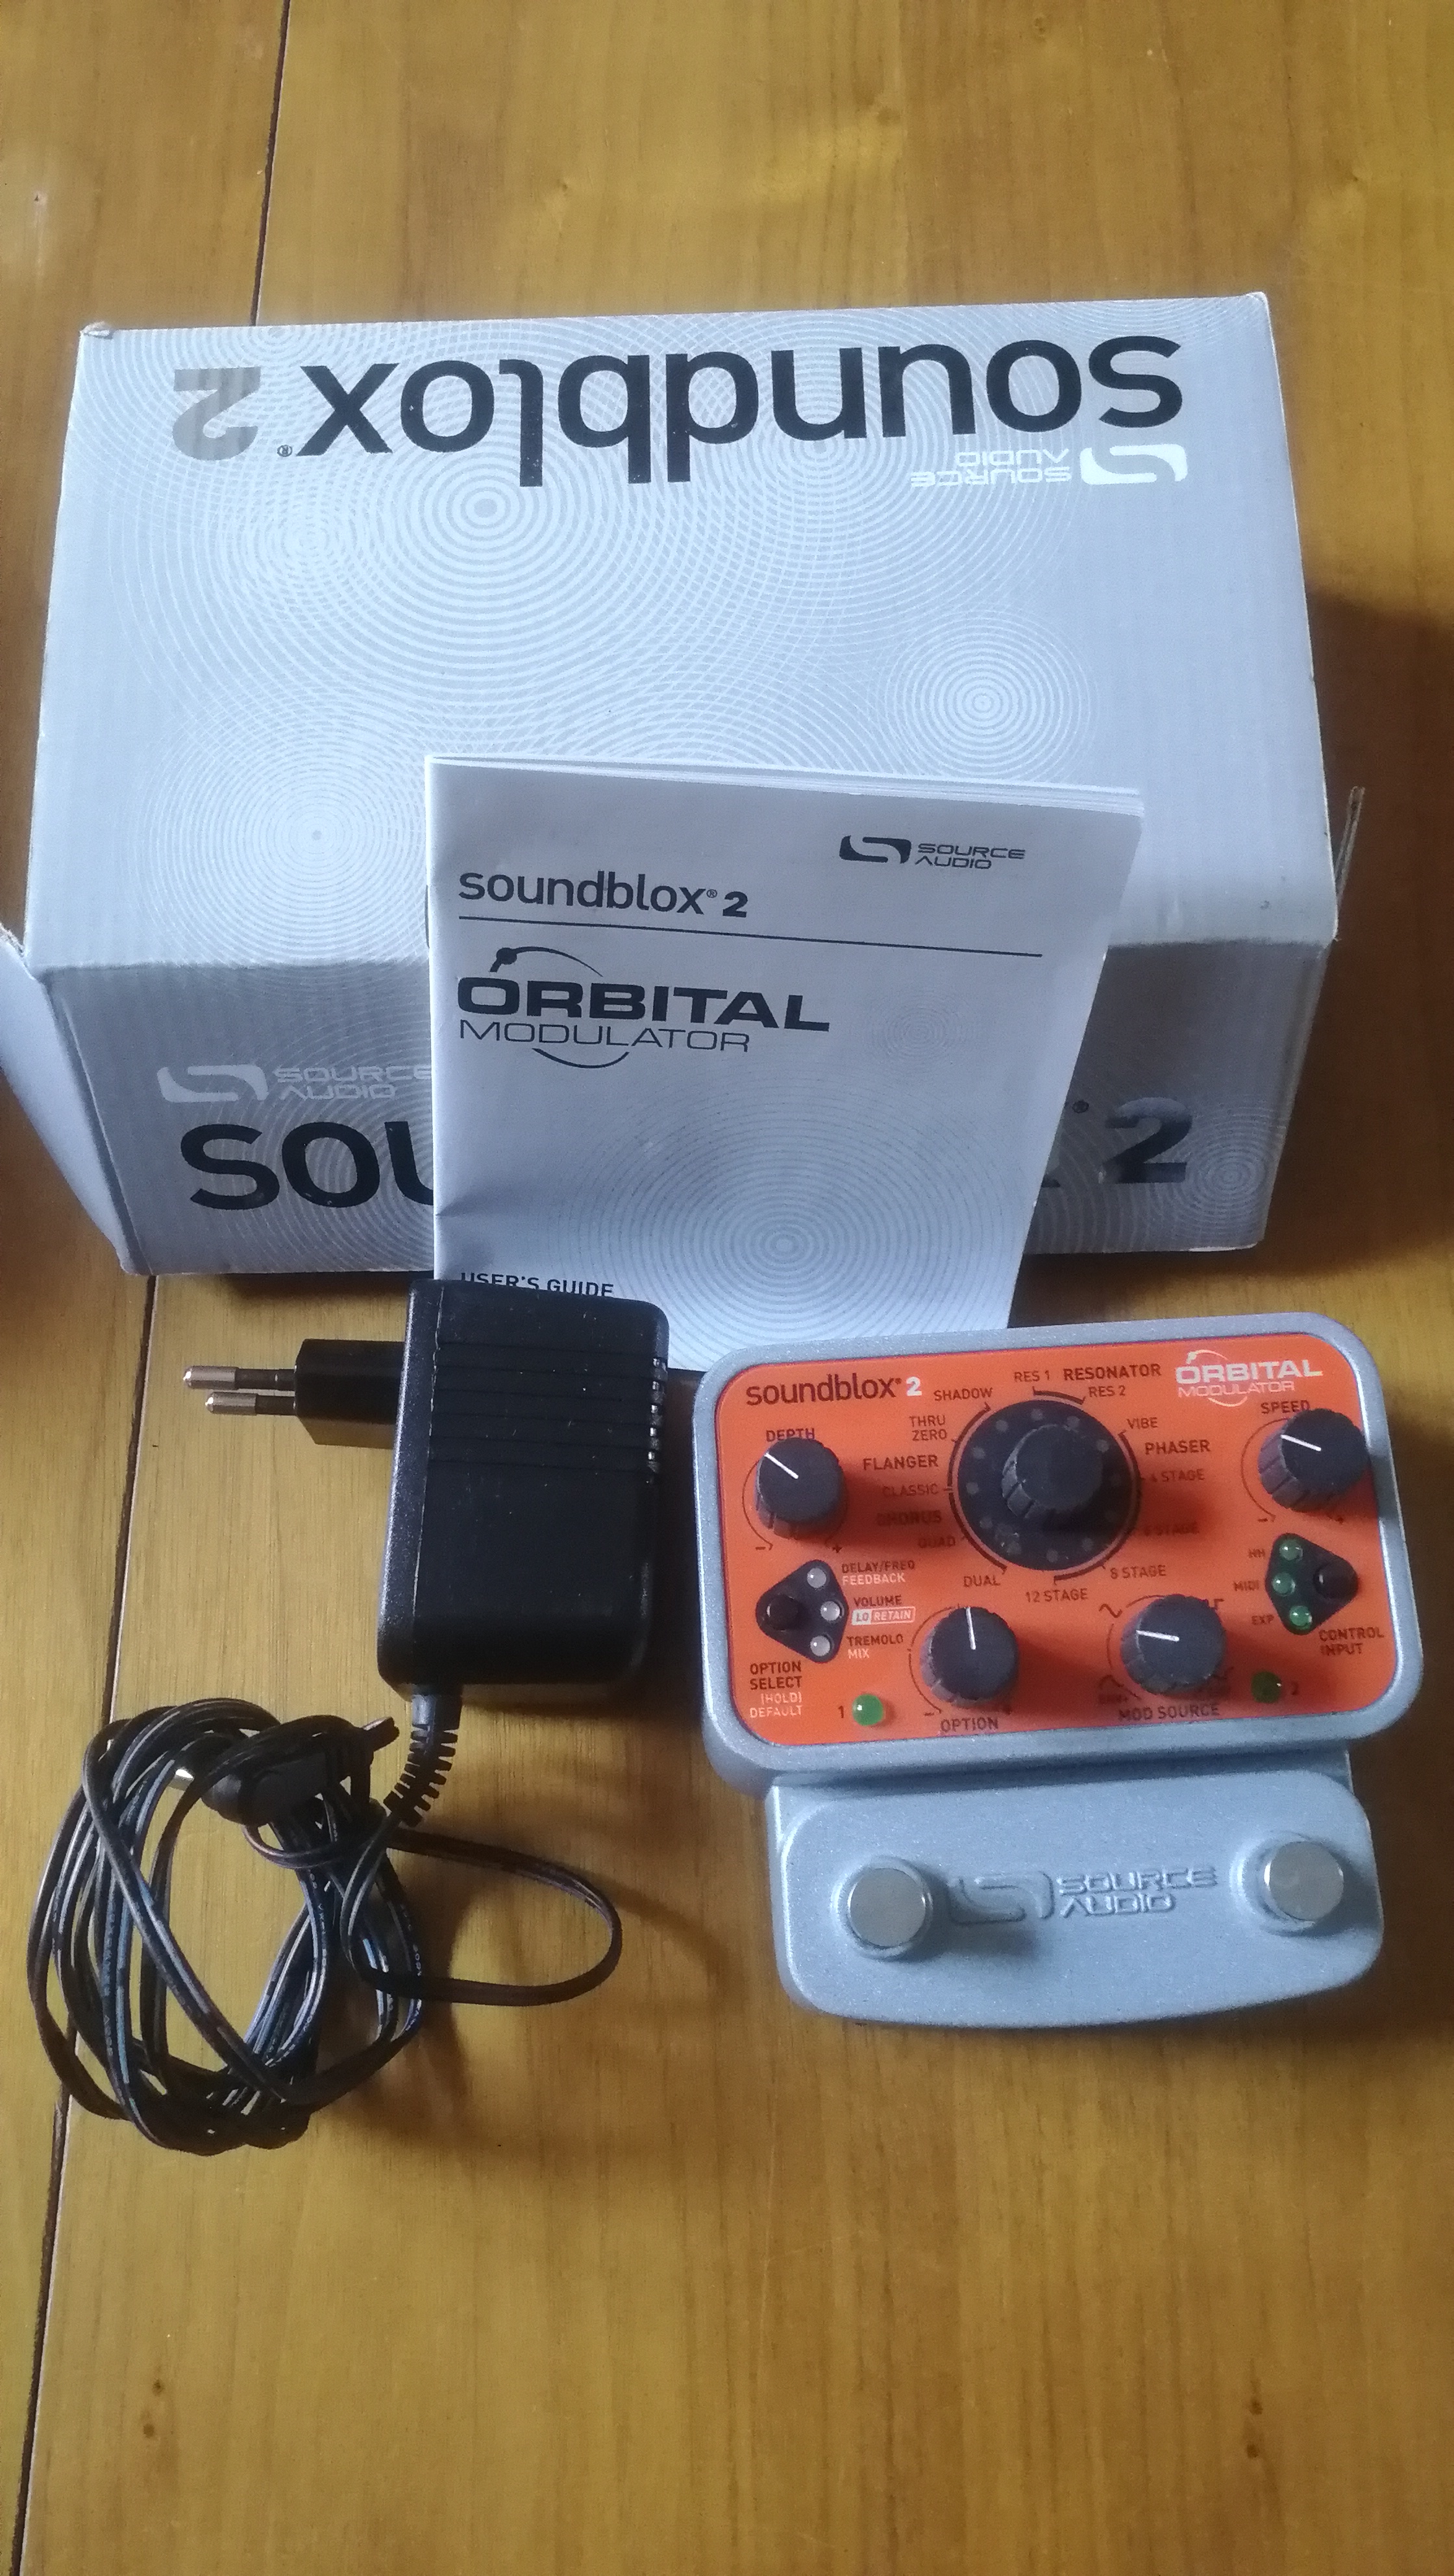 Soundblox 2 Orbital Modulator Source Audio - Audiofanzine